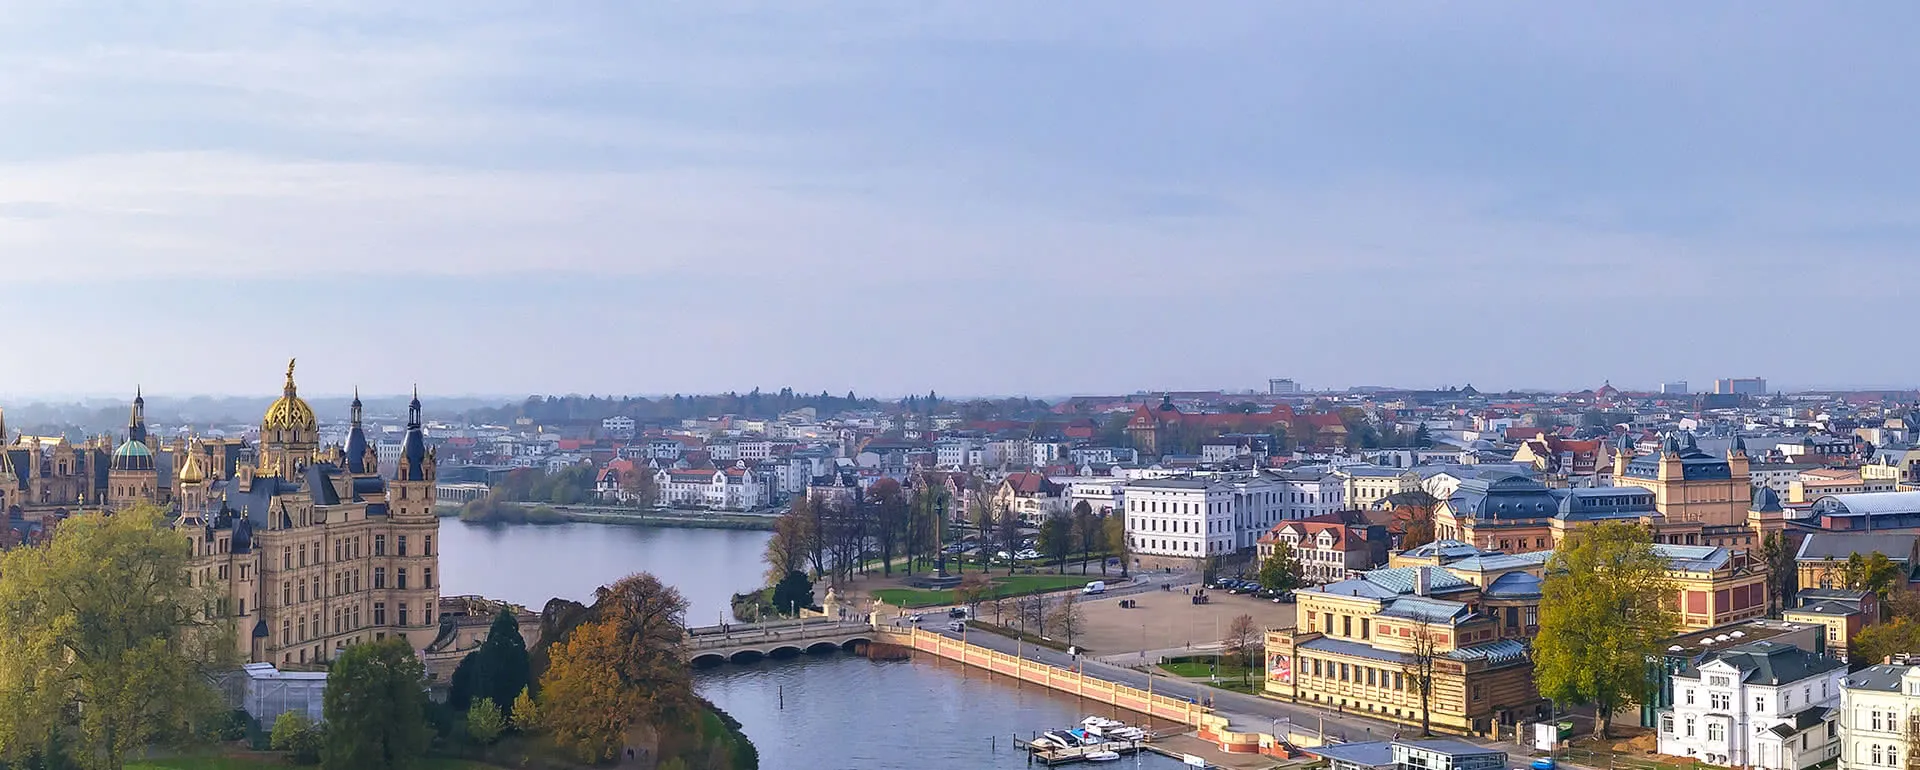 Schwerin - the destination for workers